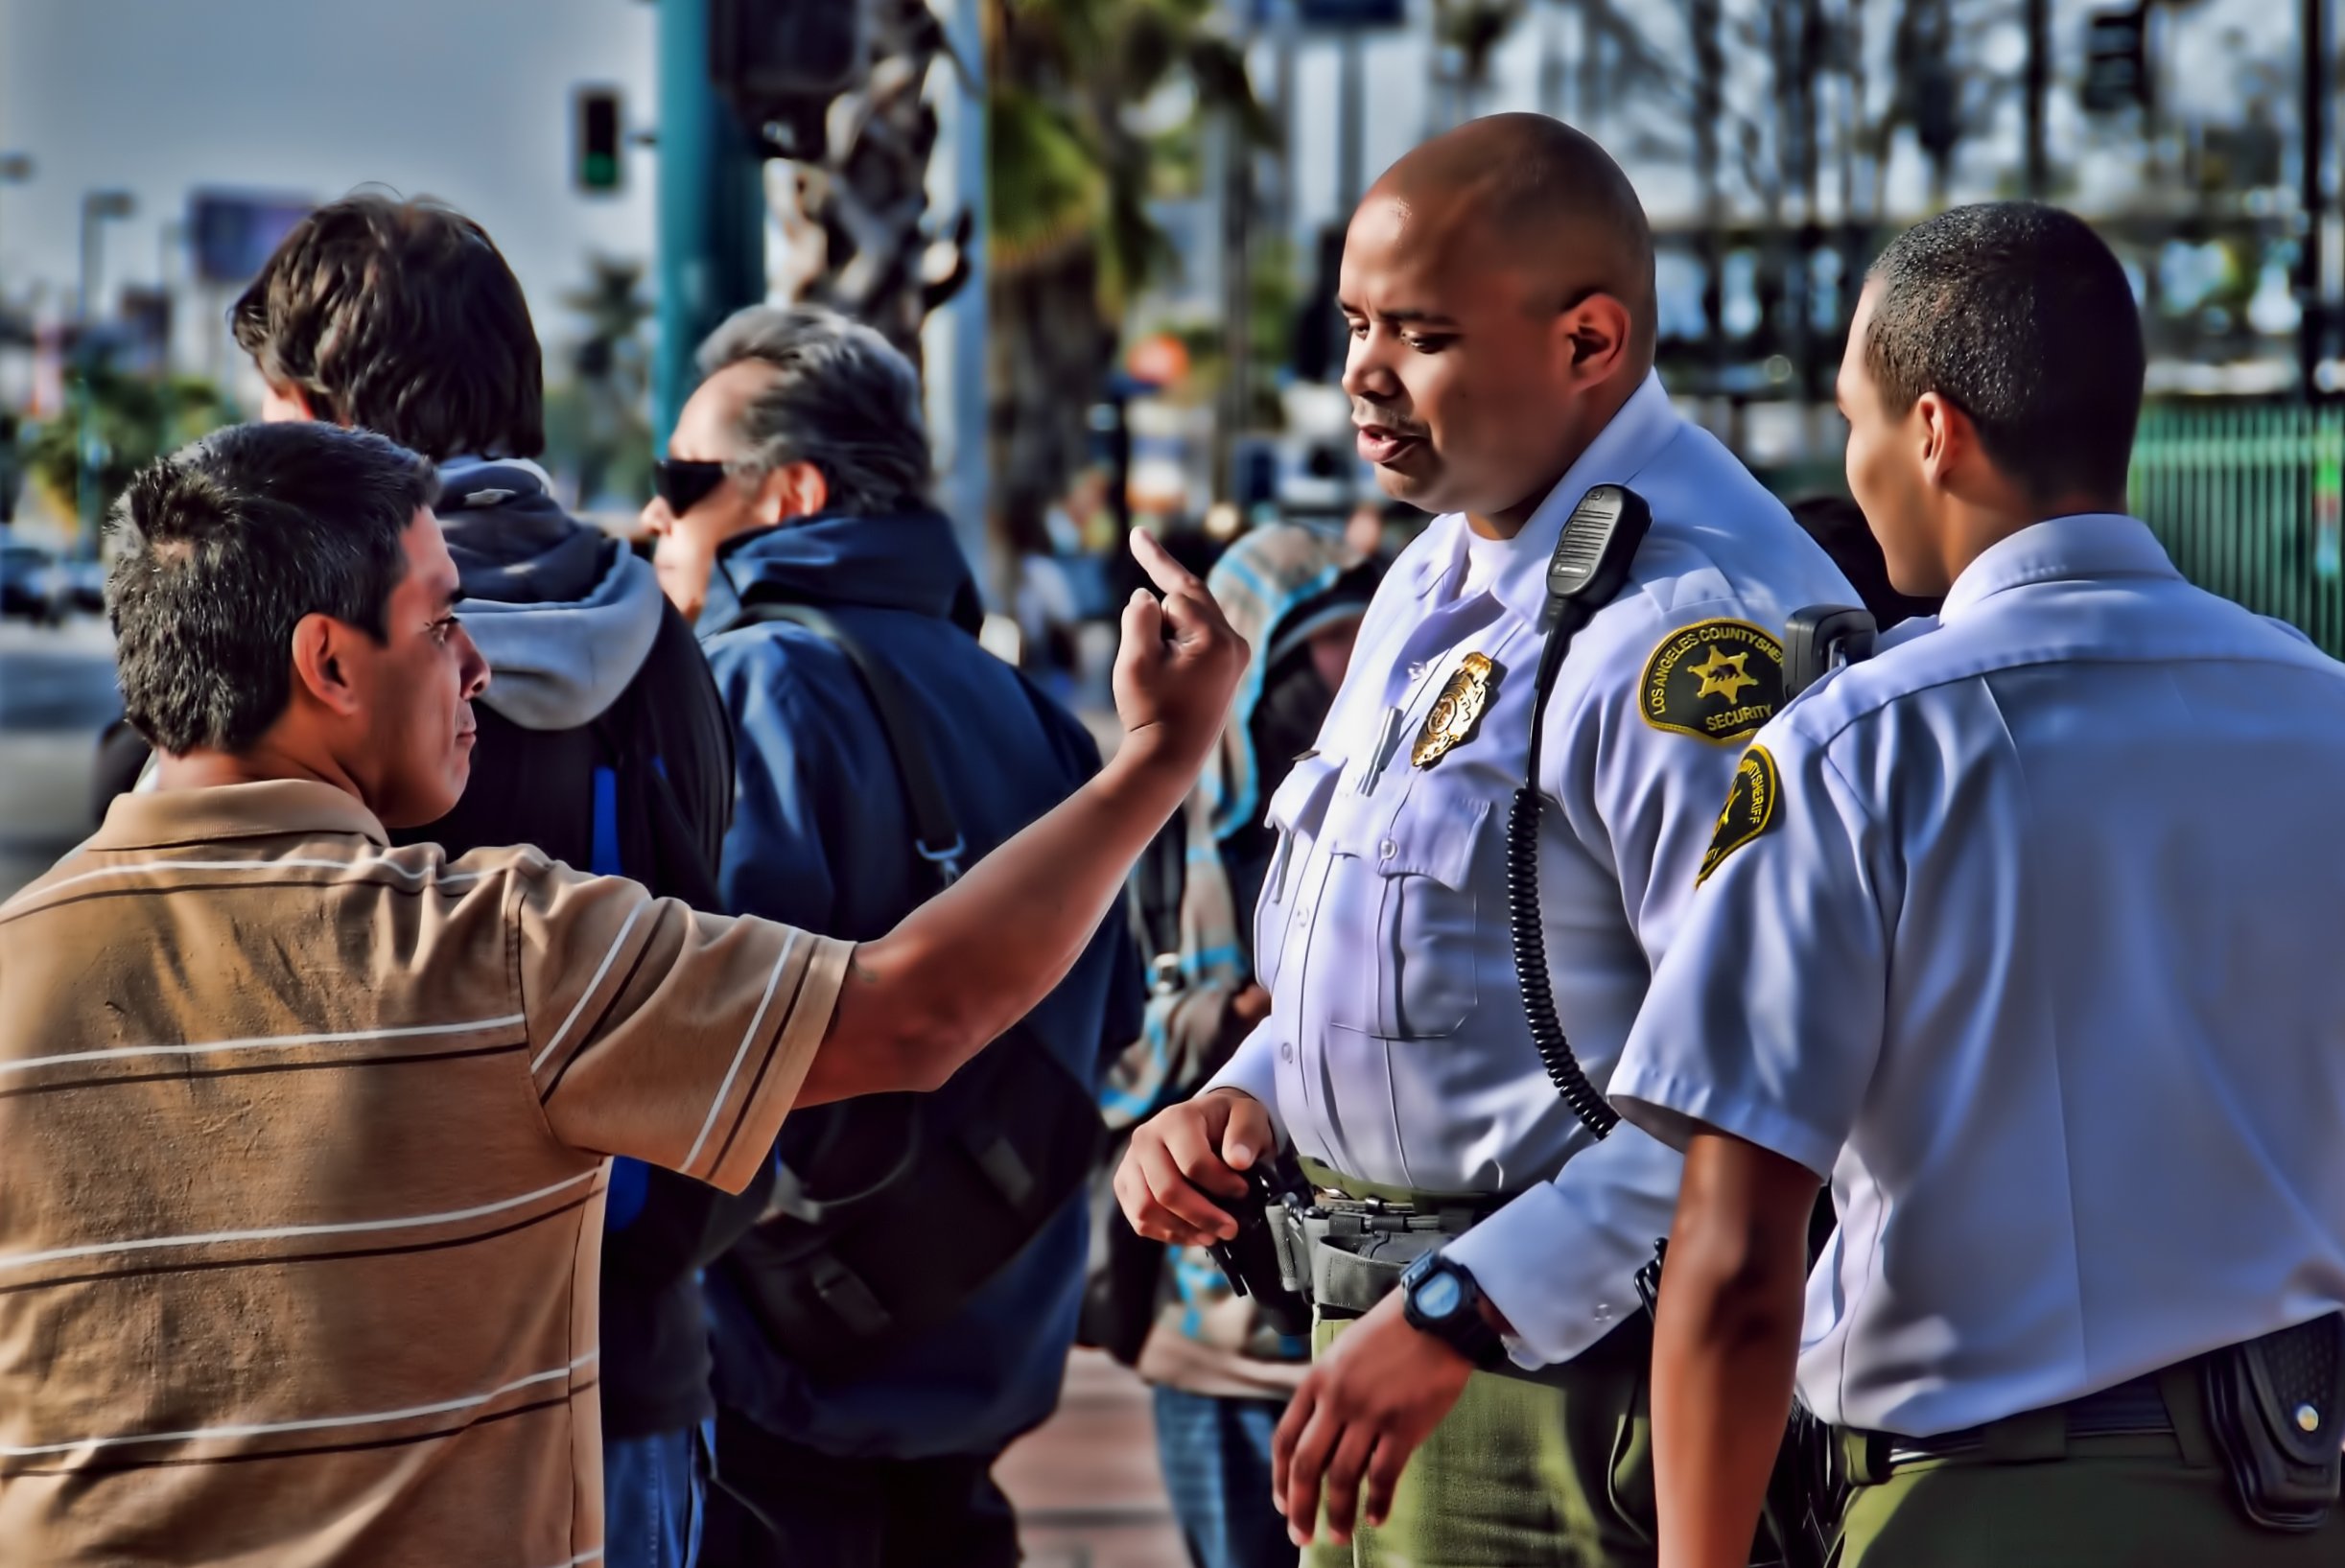 Los Angeles County Sheriff's Metro Security